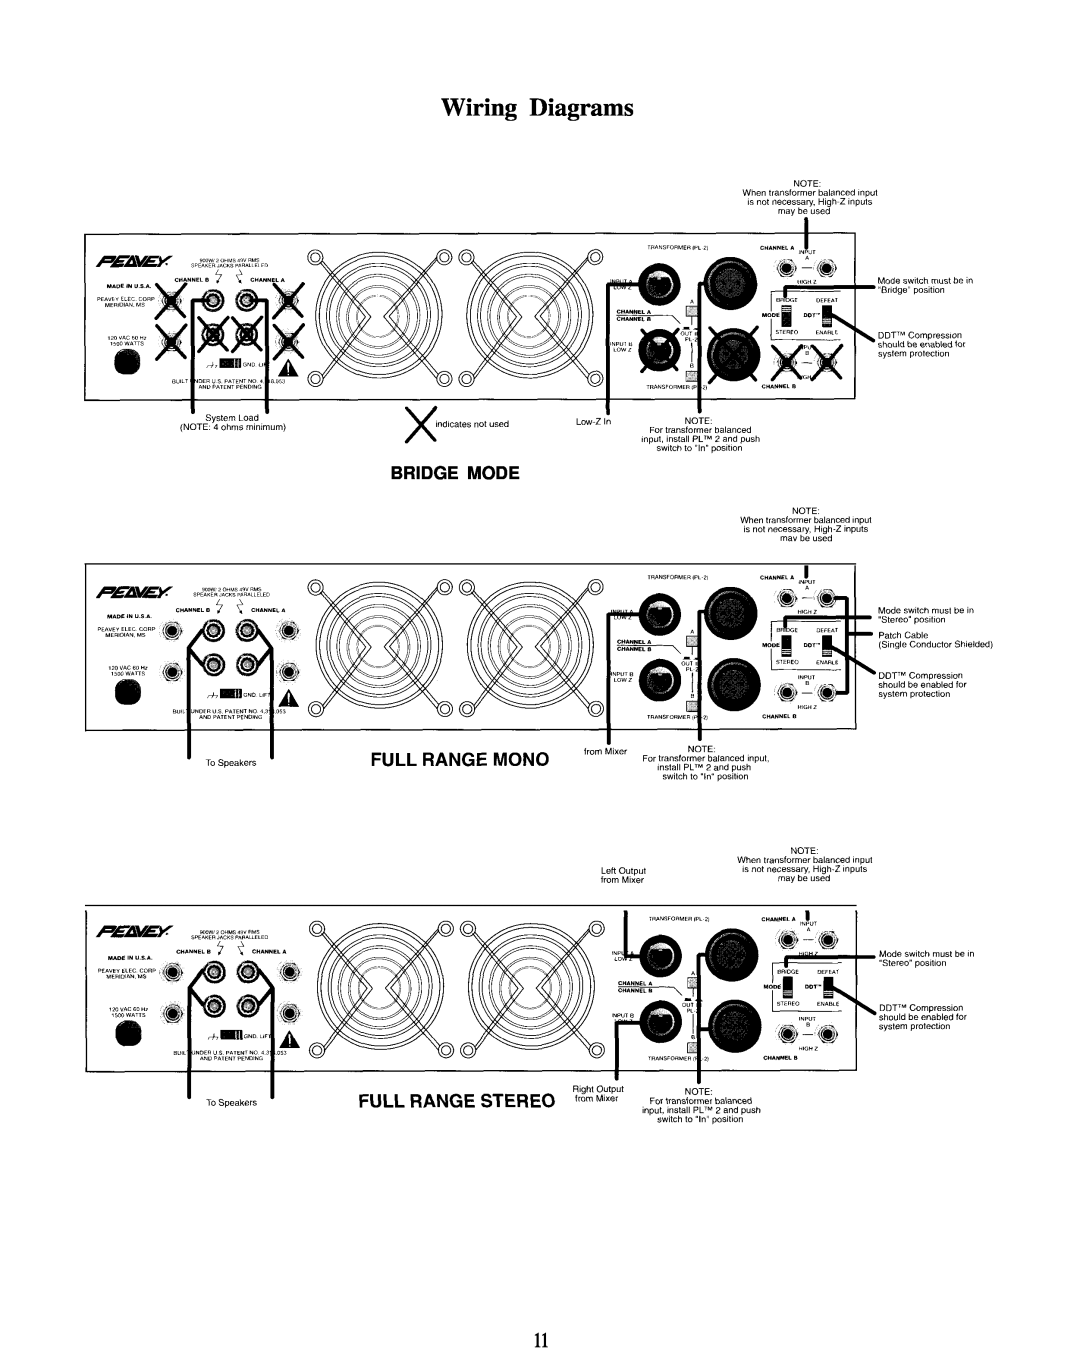 Peavey CS 1800G manual Wiring Diagrams, Bridge Mode 